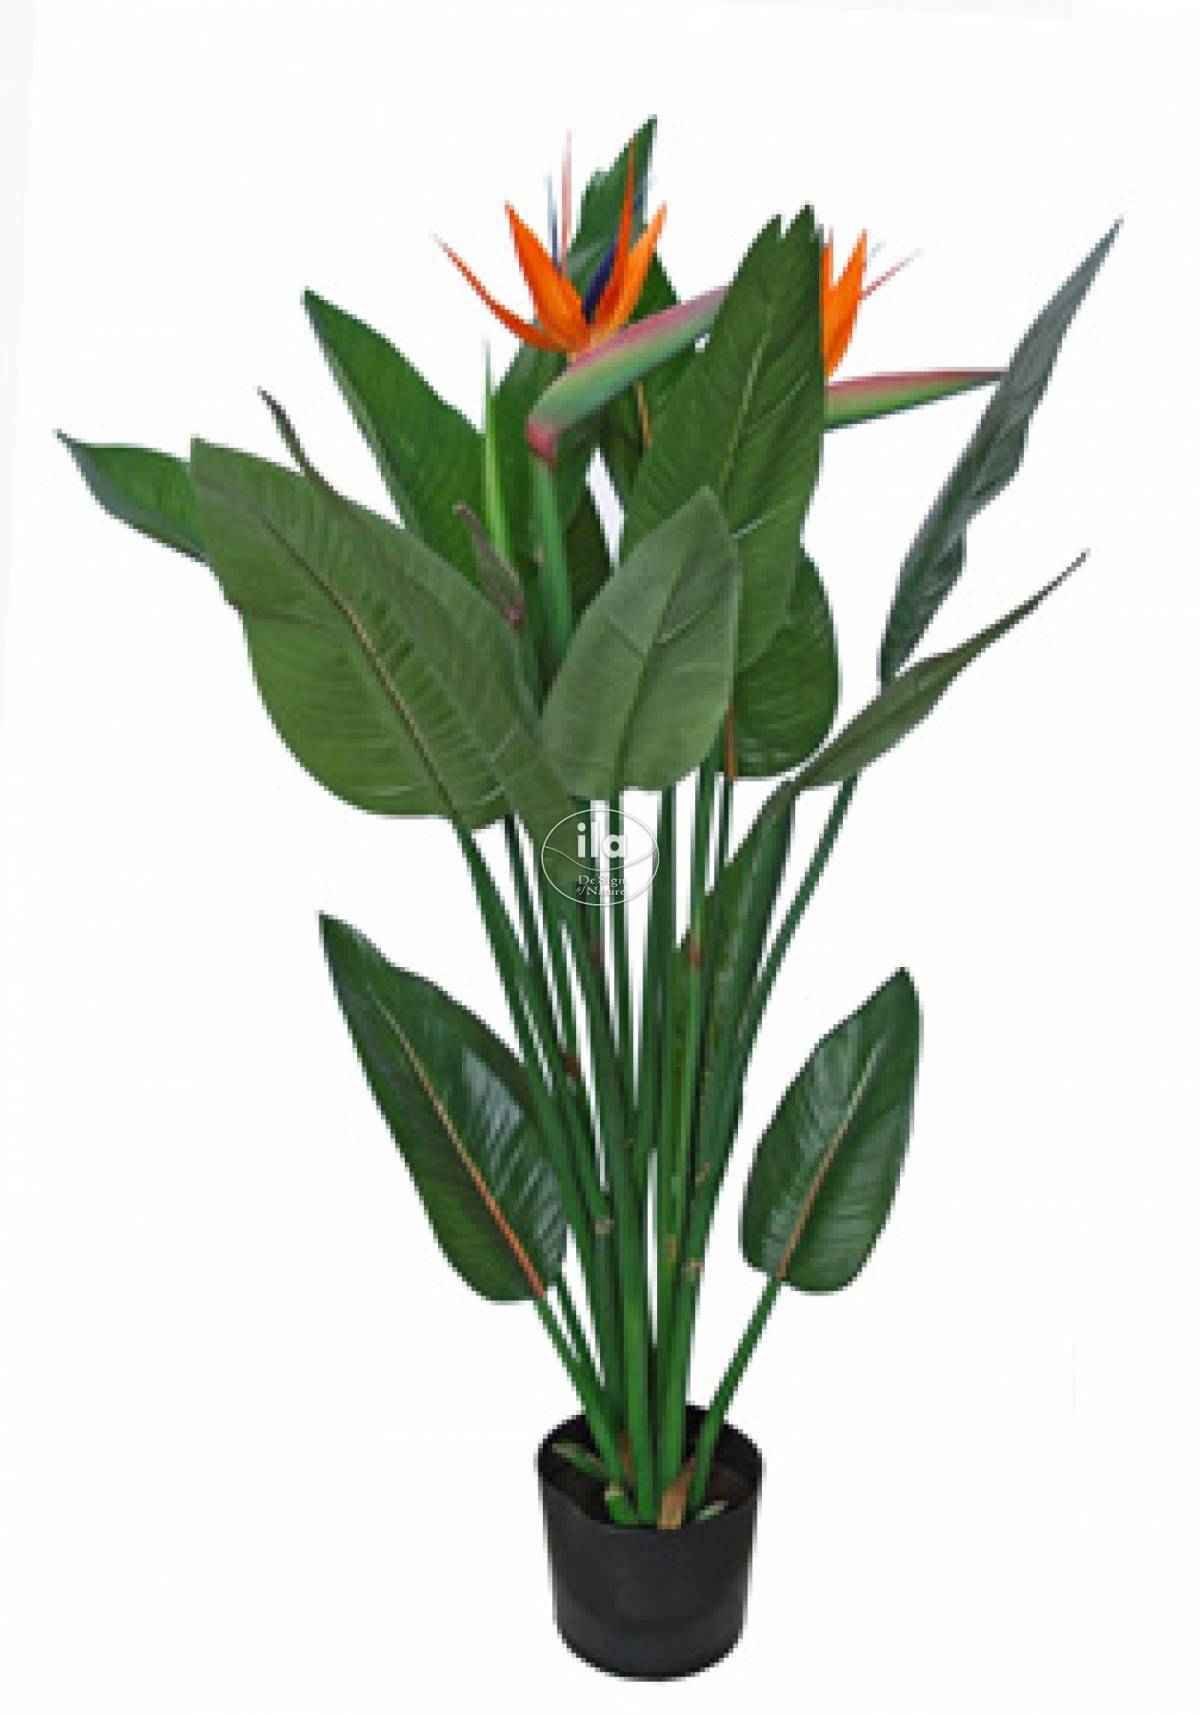 34016-strelitzia-plant-w-pot-110-cm-grn-orange-5441gor.jpg